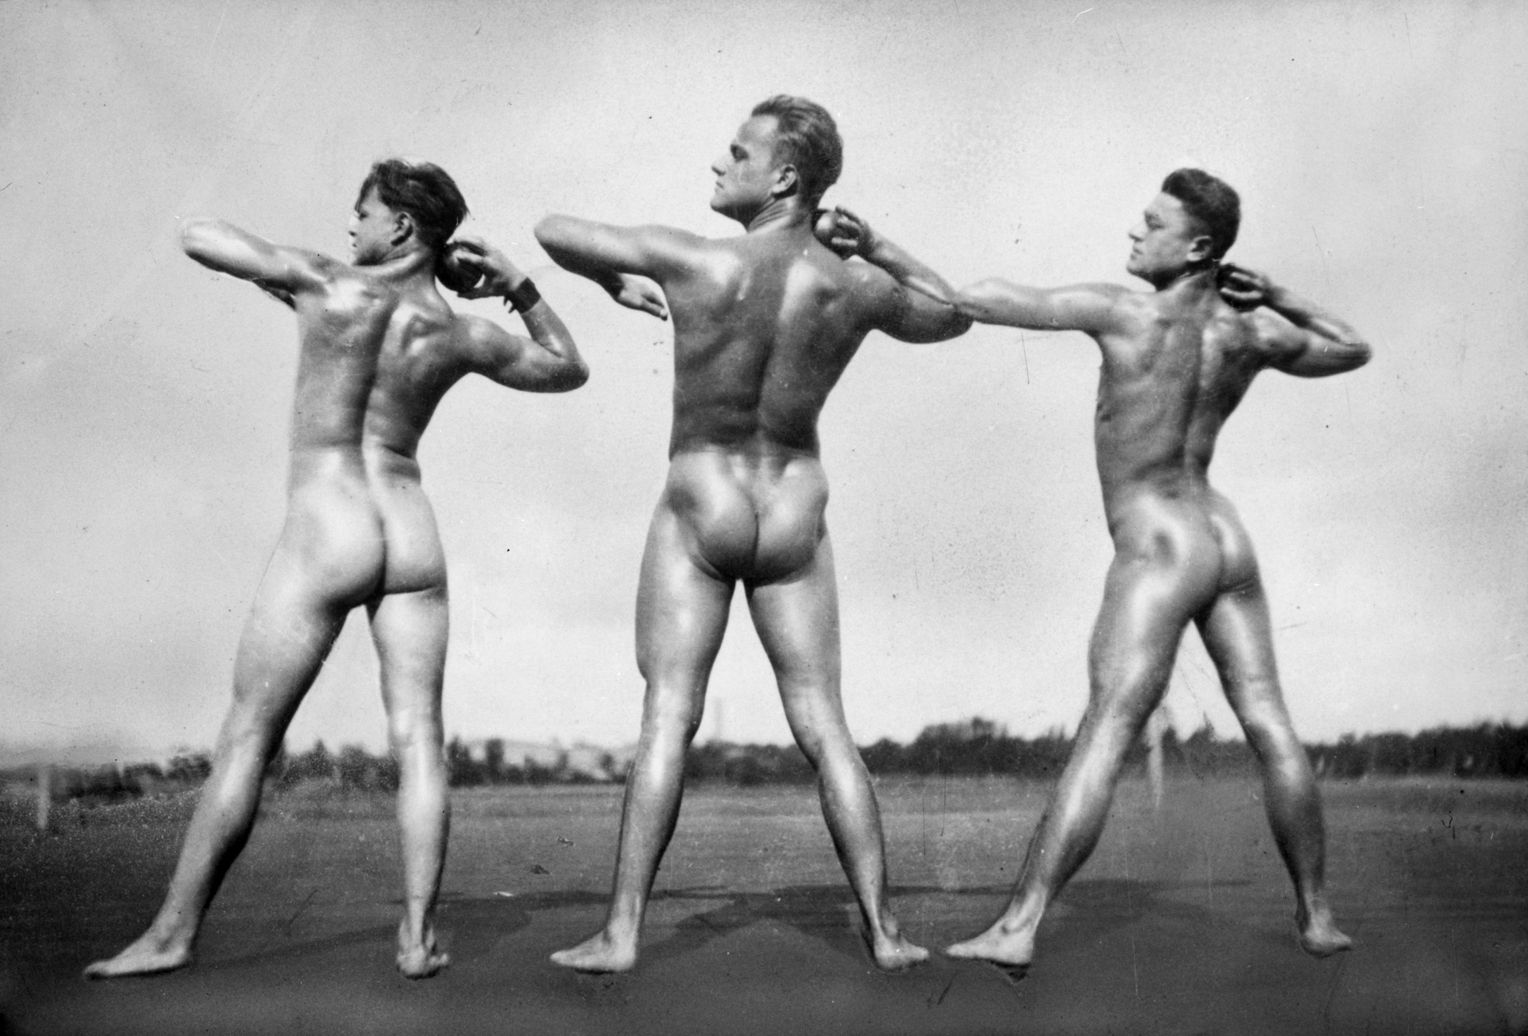 https://www.nudismlife.com/galleries/nudists_and_nude/nudists_group/old_nude_athlete.jpg